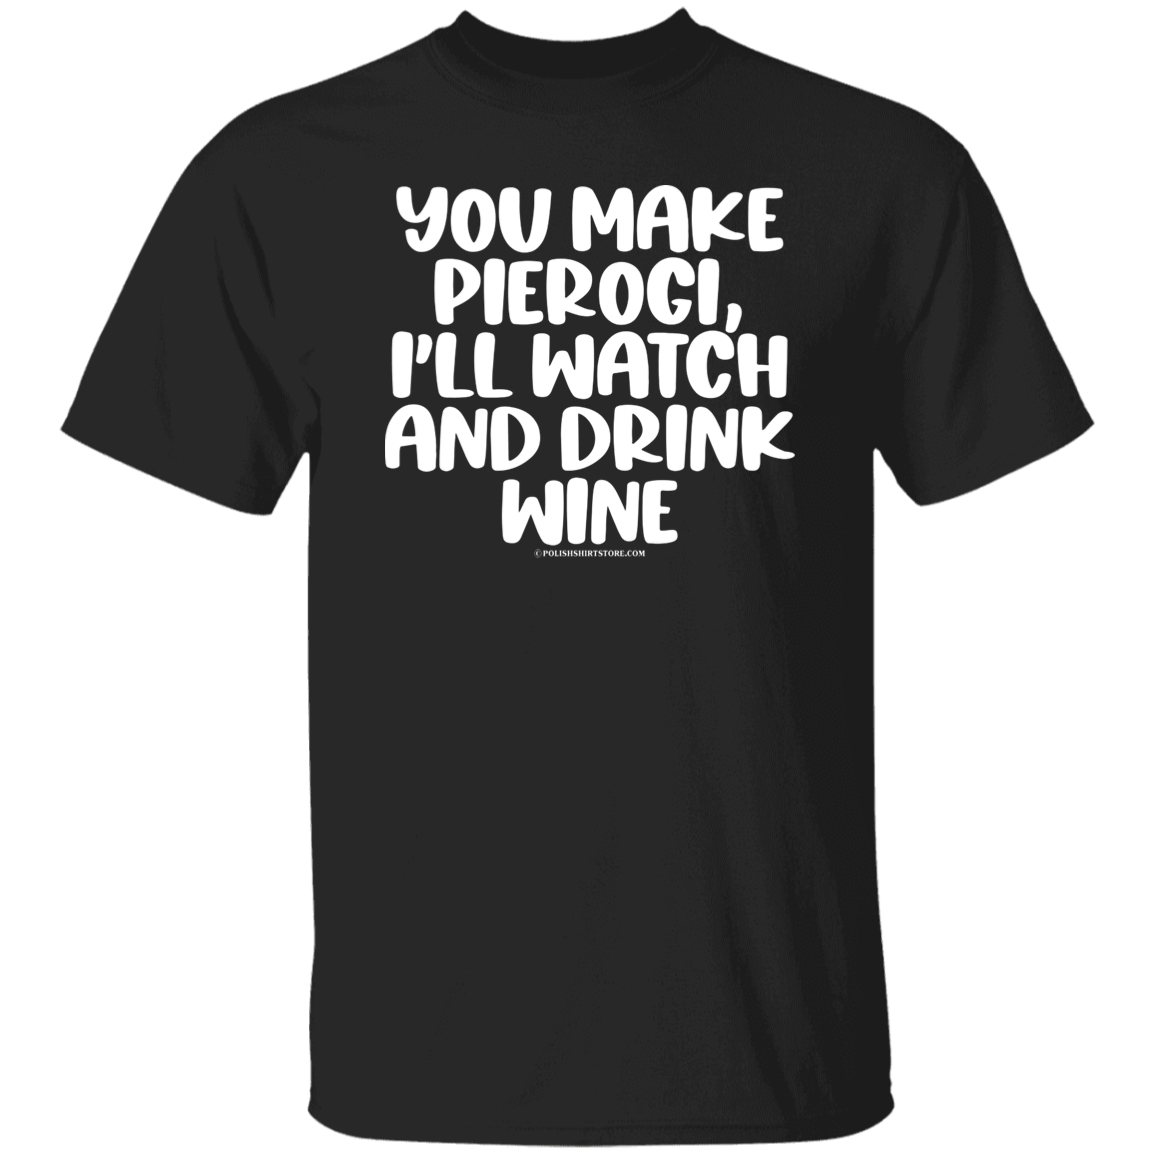 You Make Pierogi I'll Watch And Drink Wine Apparel CustomCat G500 5.3 oz. T-Shirt Black S